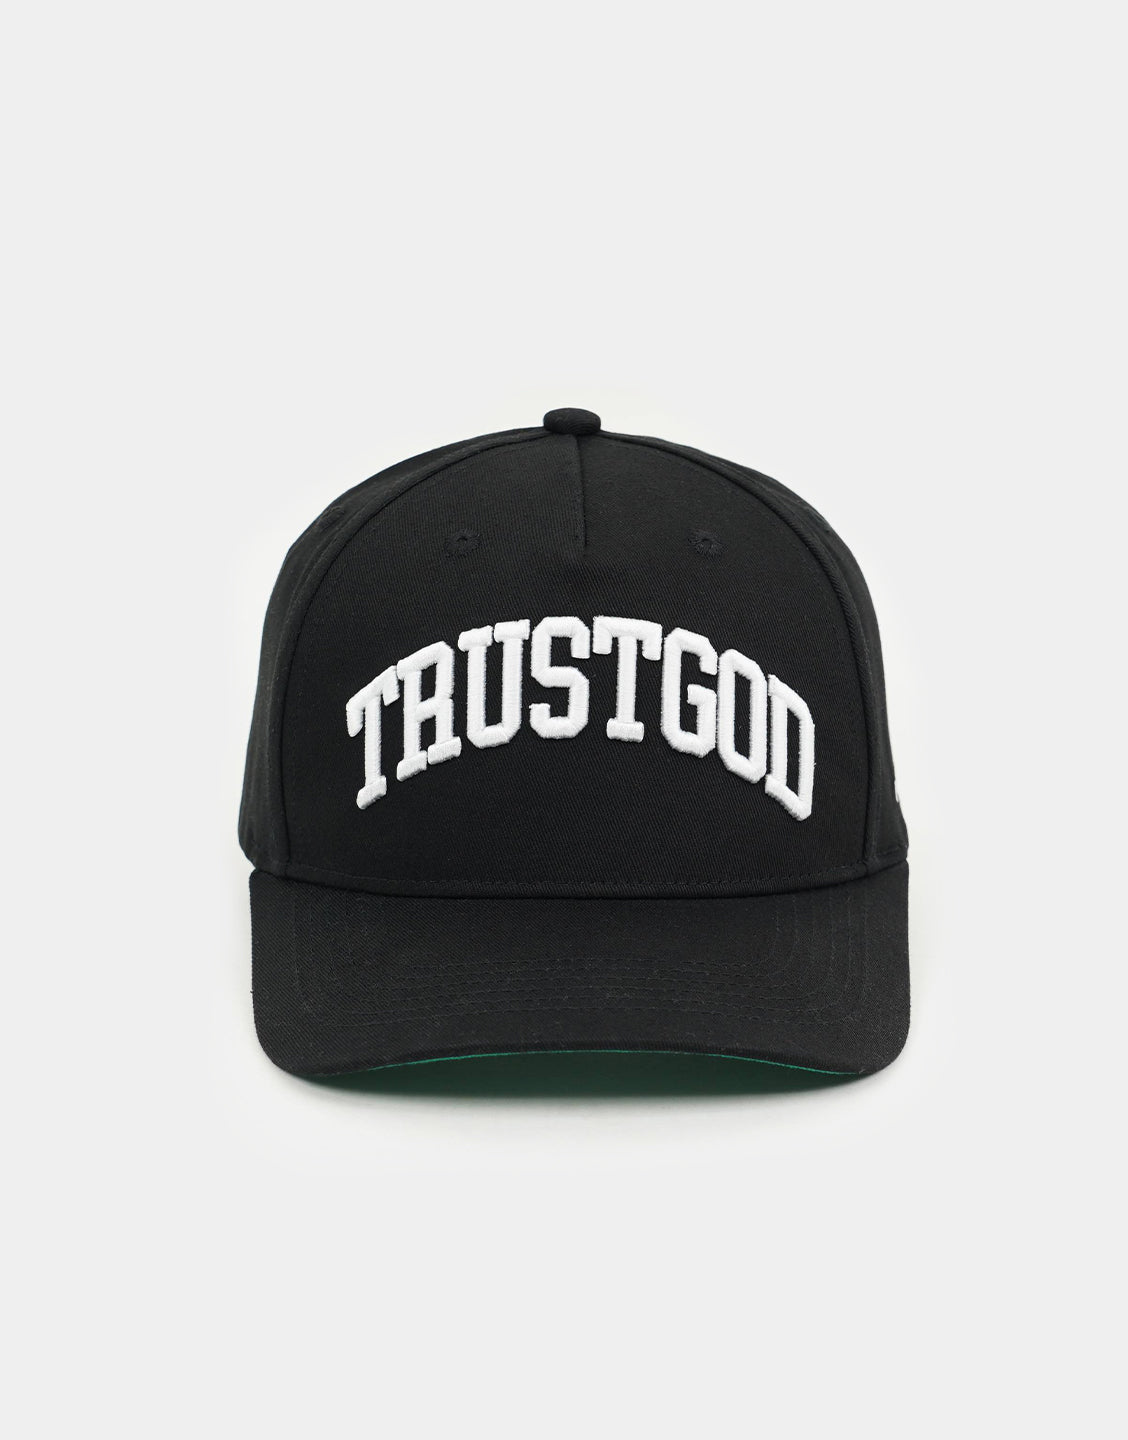 Trust God Premium Baseball Hat - Black - VOTC Clothing